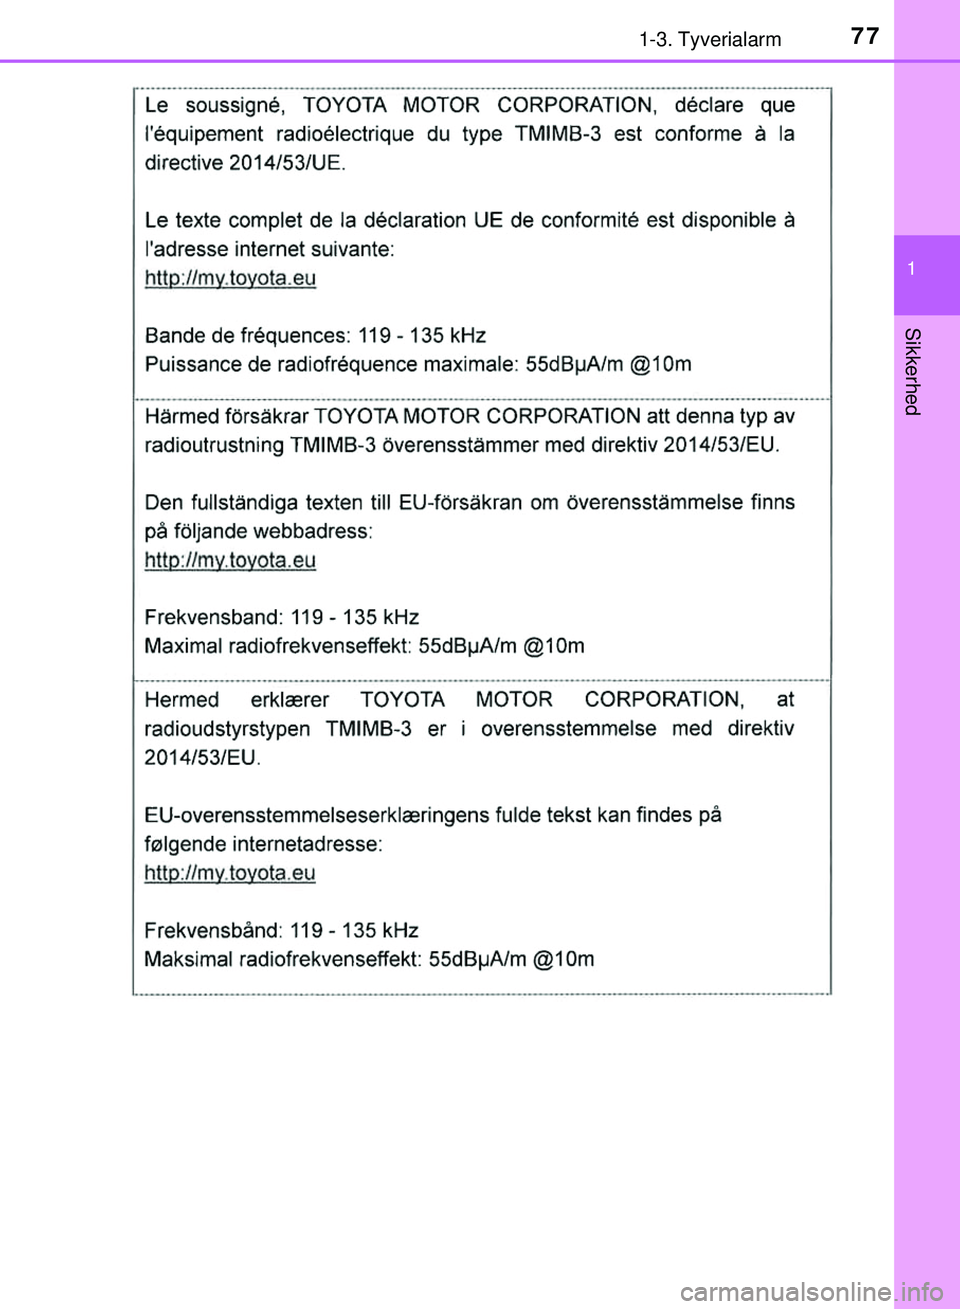 TOYOTA PRIUS PLUG-IN HYBRID 2018  Brugsanvisning (in Danish) 771-3. Tyverialarm
1
OM47C99DK
Sikkerhed
OM47C99DK.book  Page 77  Friday, August 10, 2018  11:20 AM 